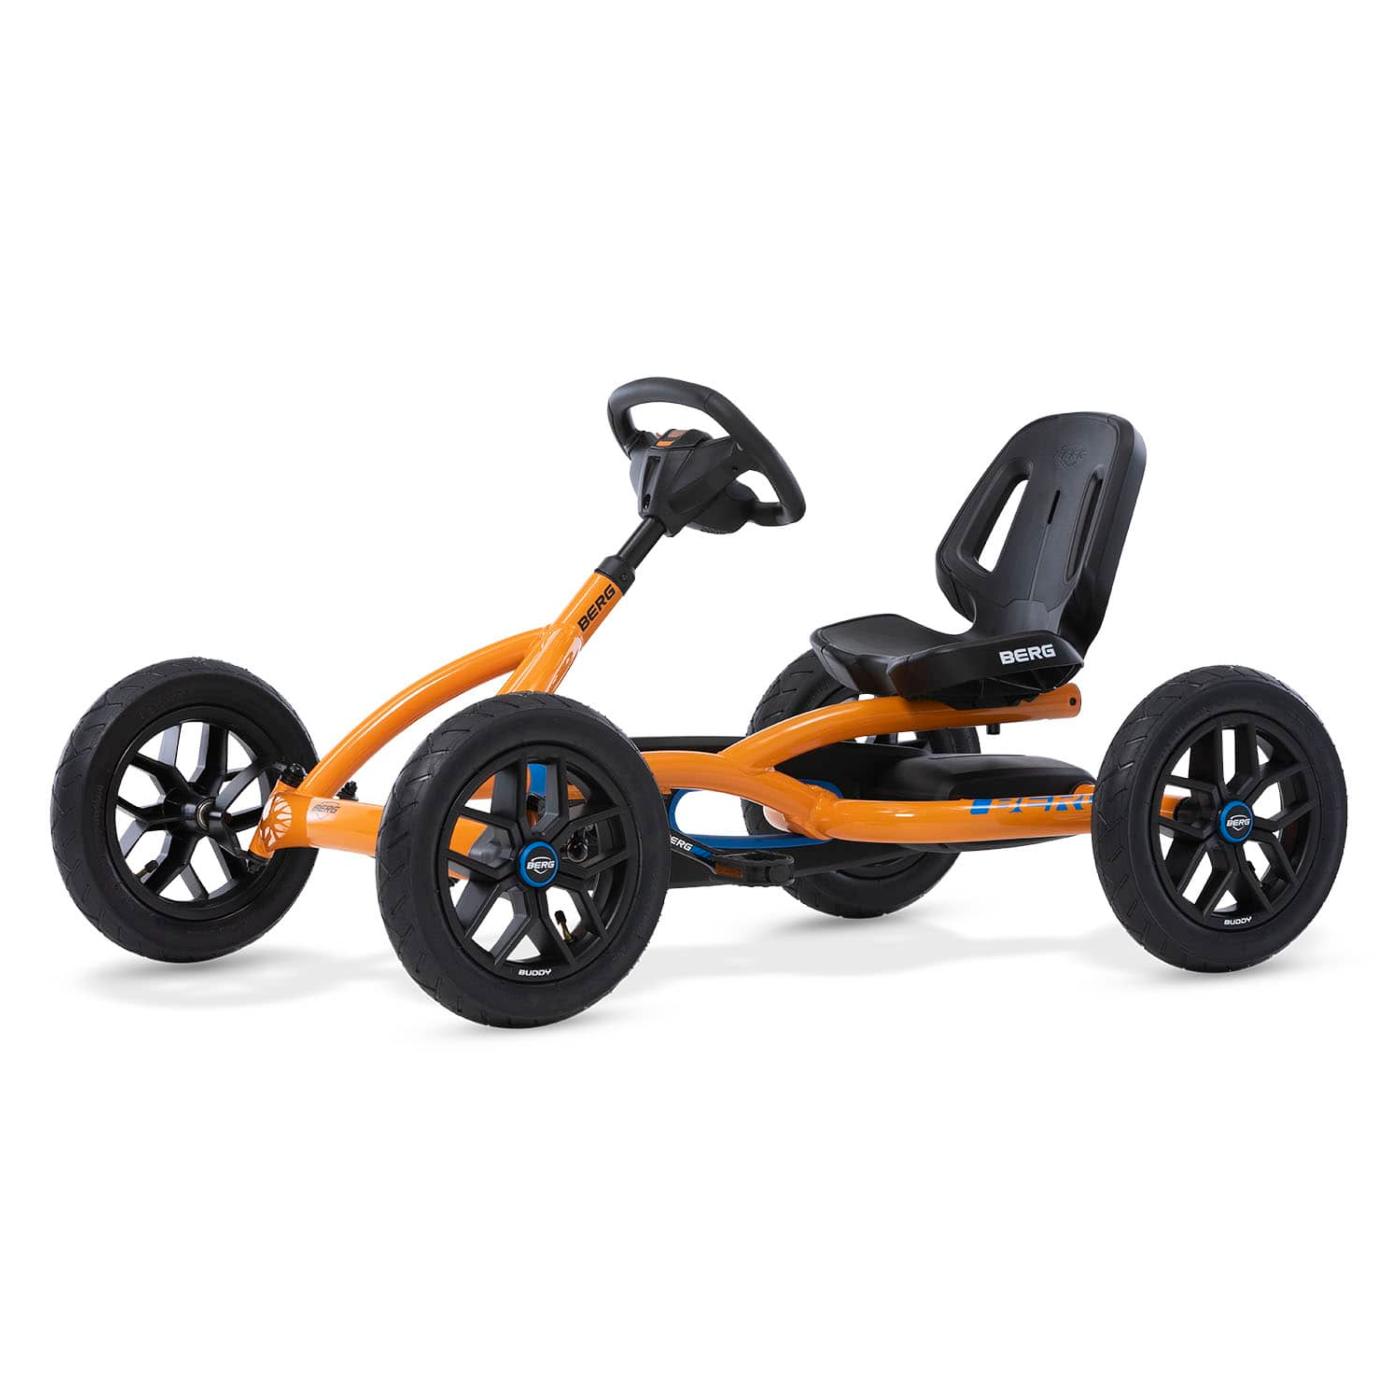 Cotxe de pedals BERG Buddy B-Orange taronja 3 a 8 anys